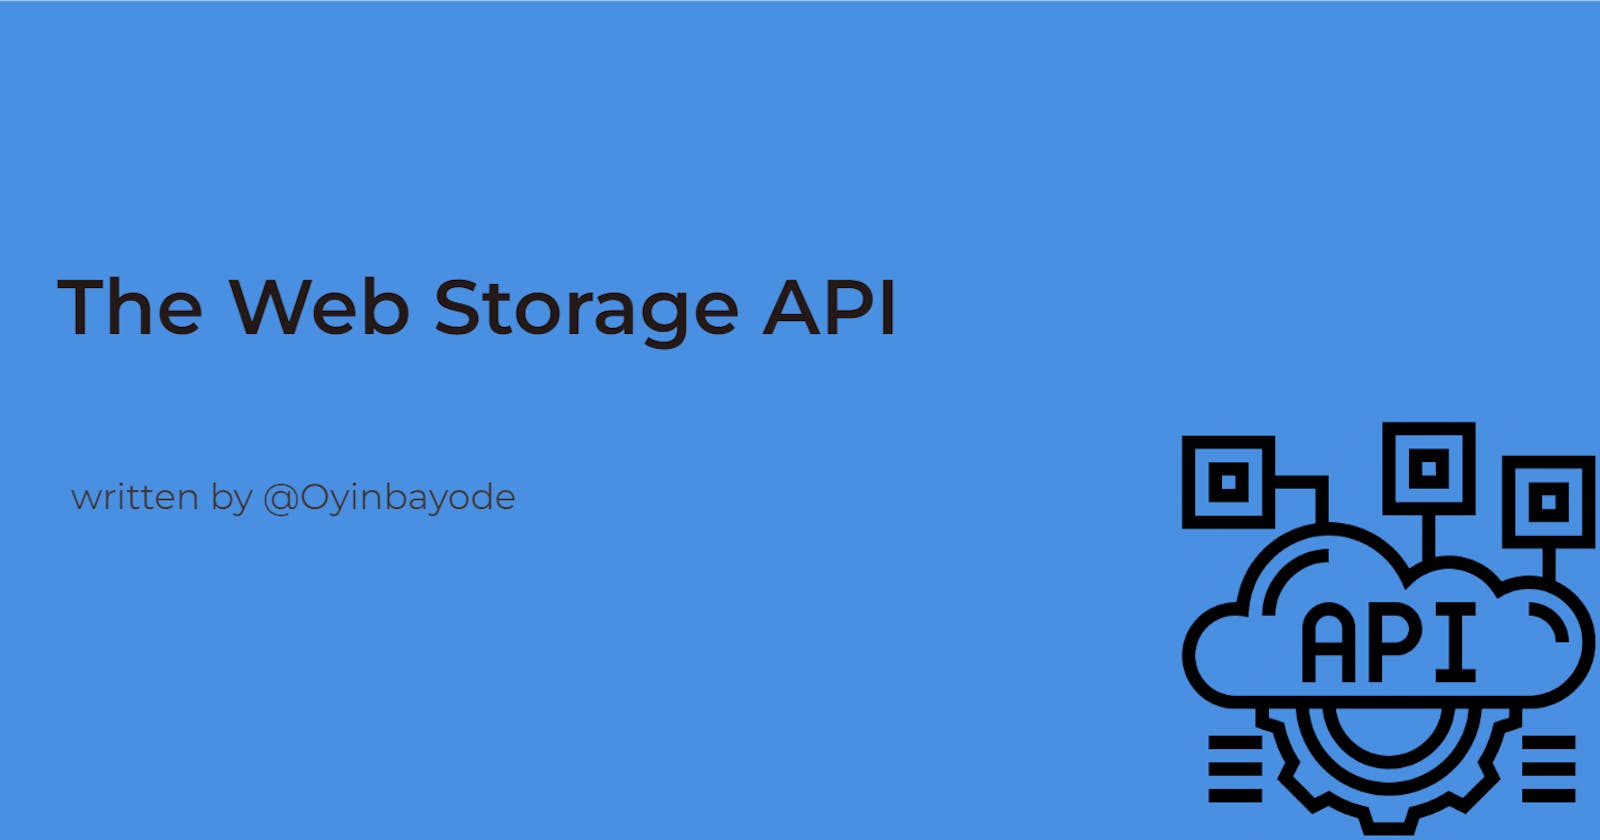 The Web Storage API